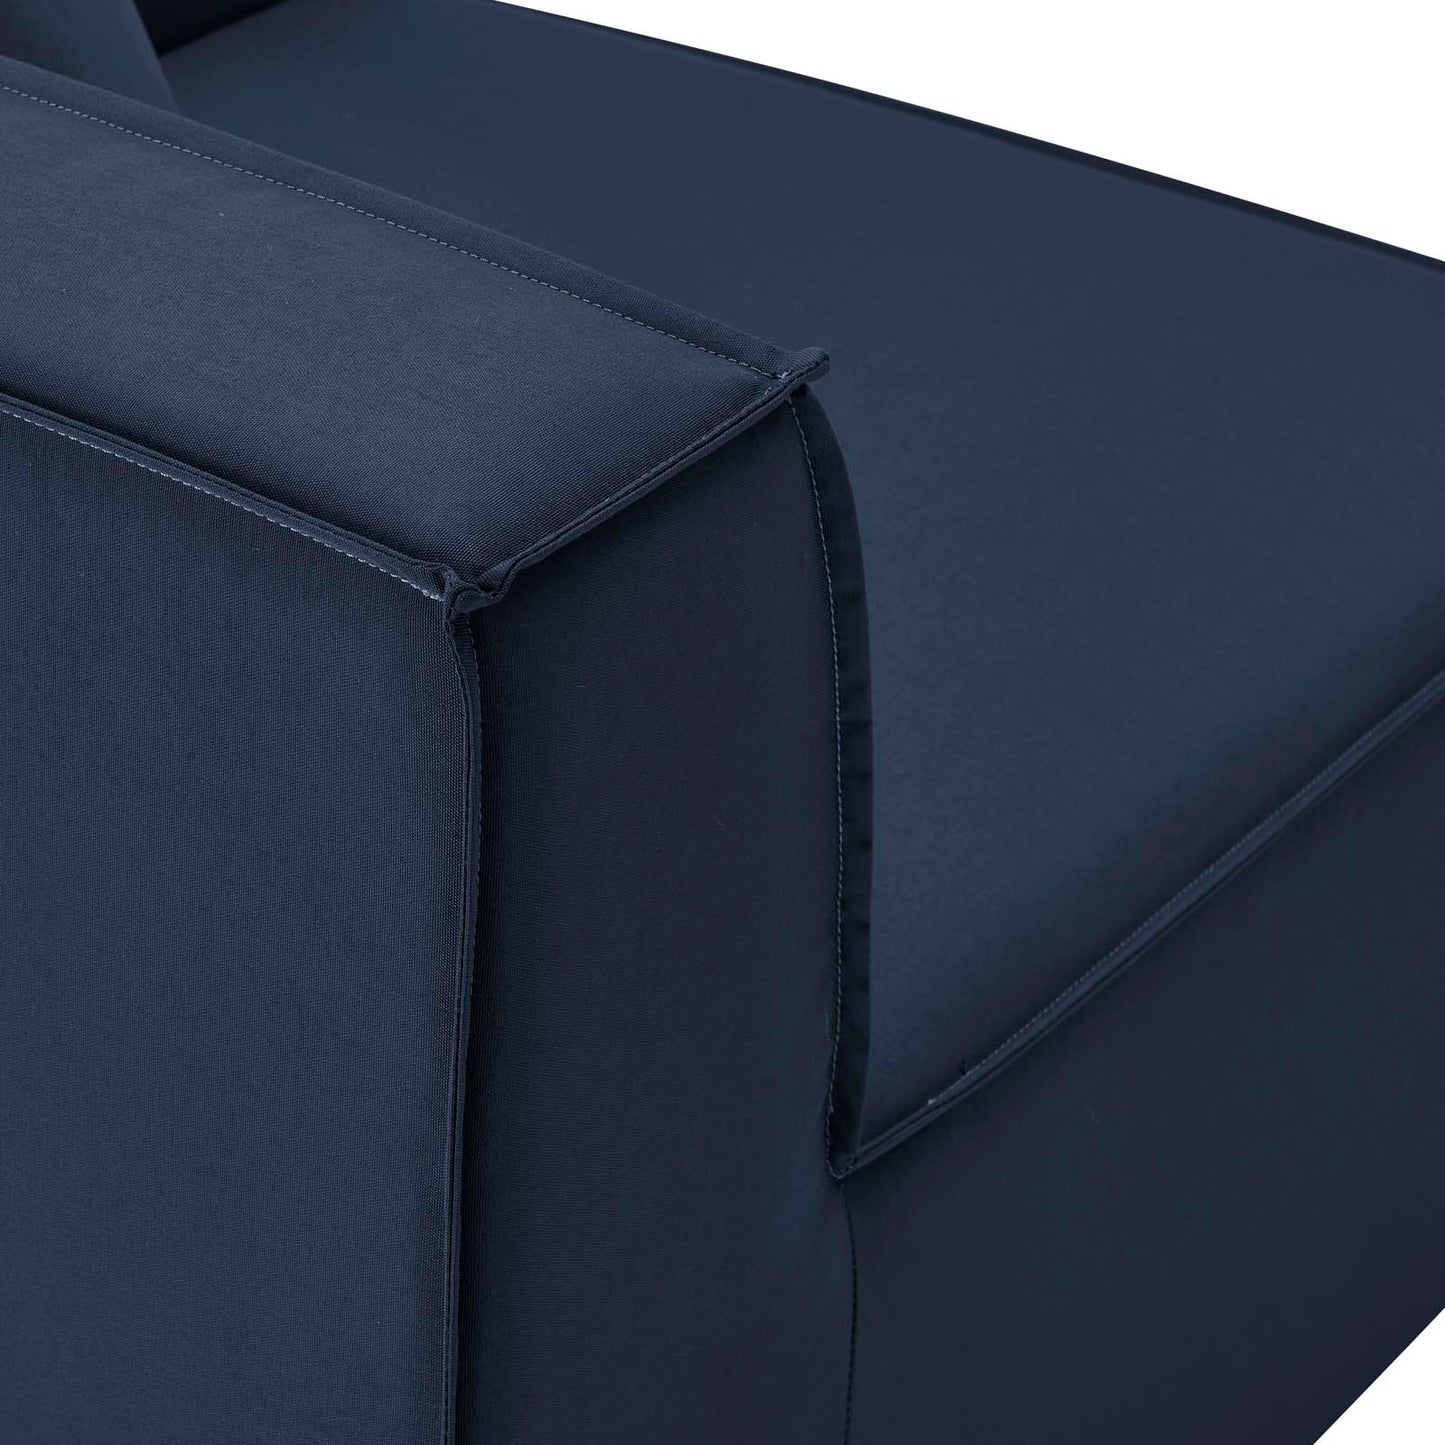 Saybrook Outdoor Patio Upholstered 10-Piece Sectional Sofa Navy EEI-4389-NAV